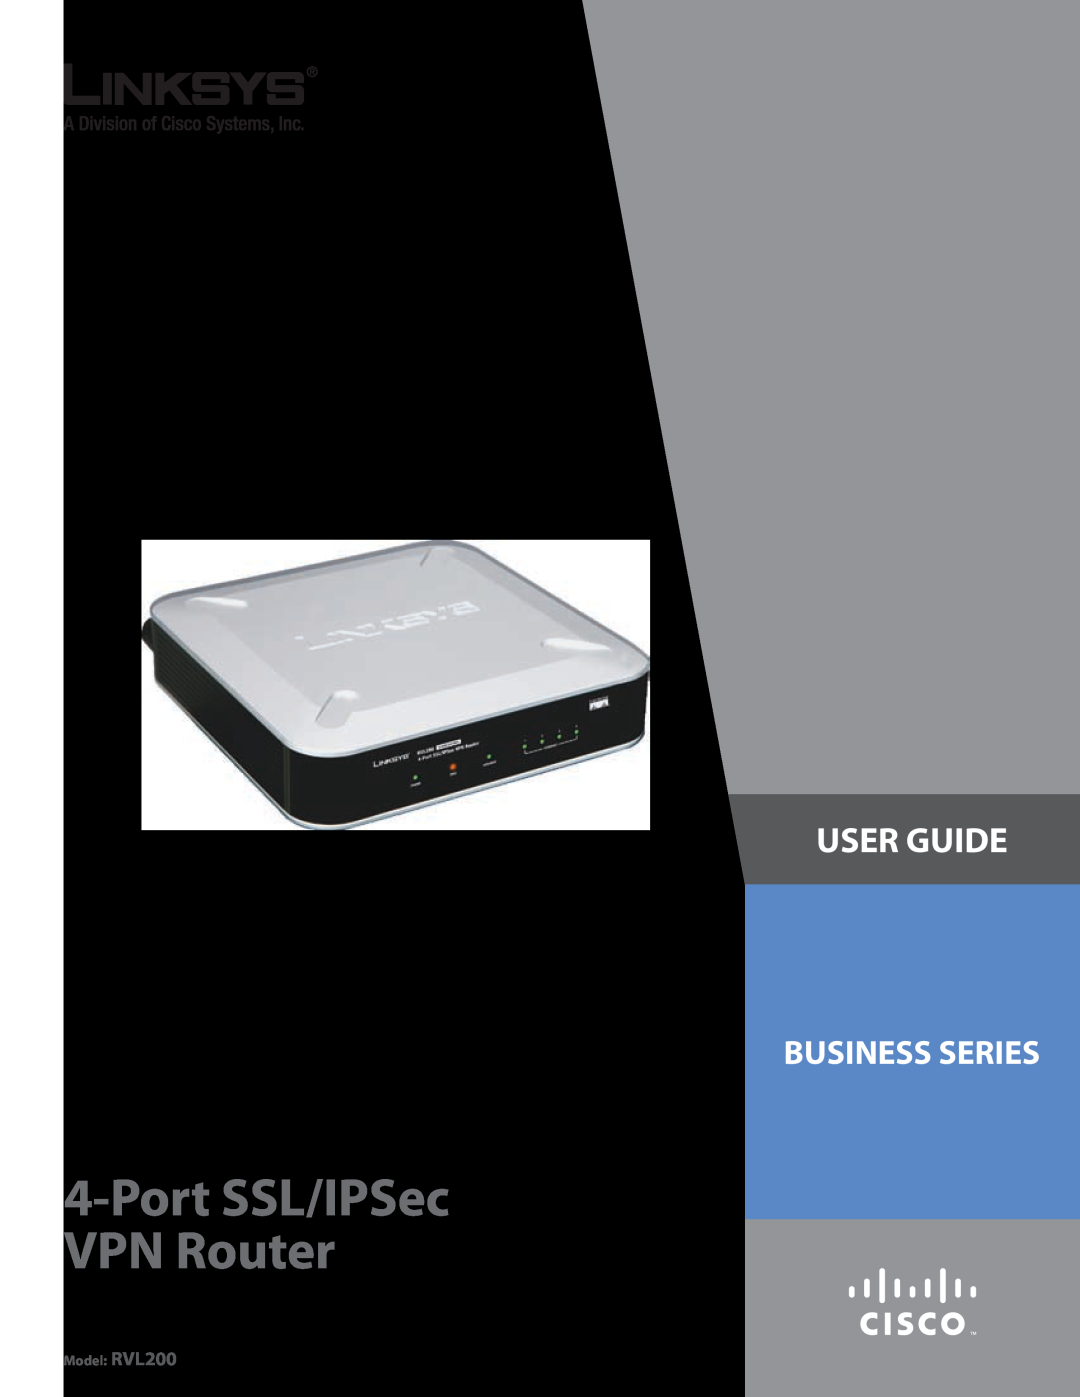 Cisco Systems manual Port SSL/IPSec VPN Router, User Guide, Business Series, Model RVL200 